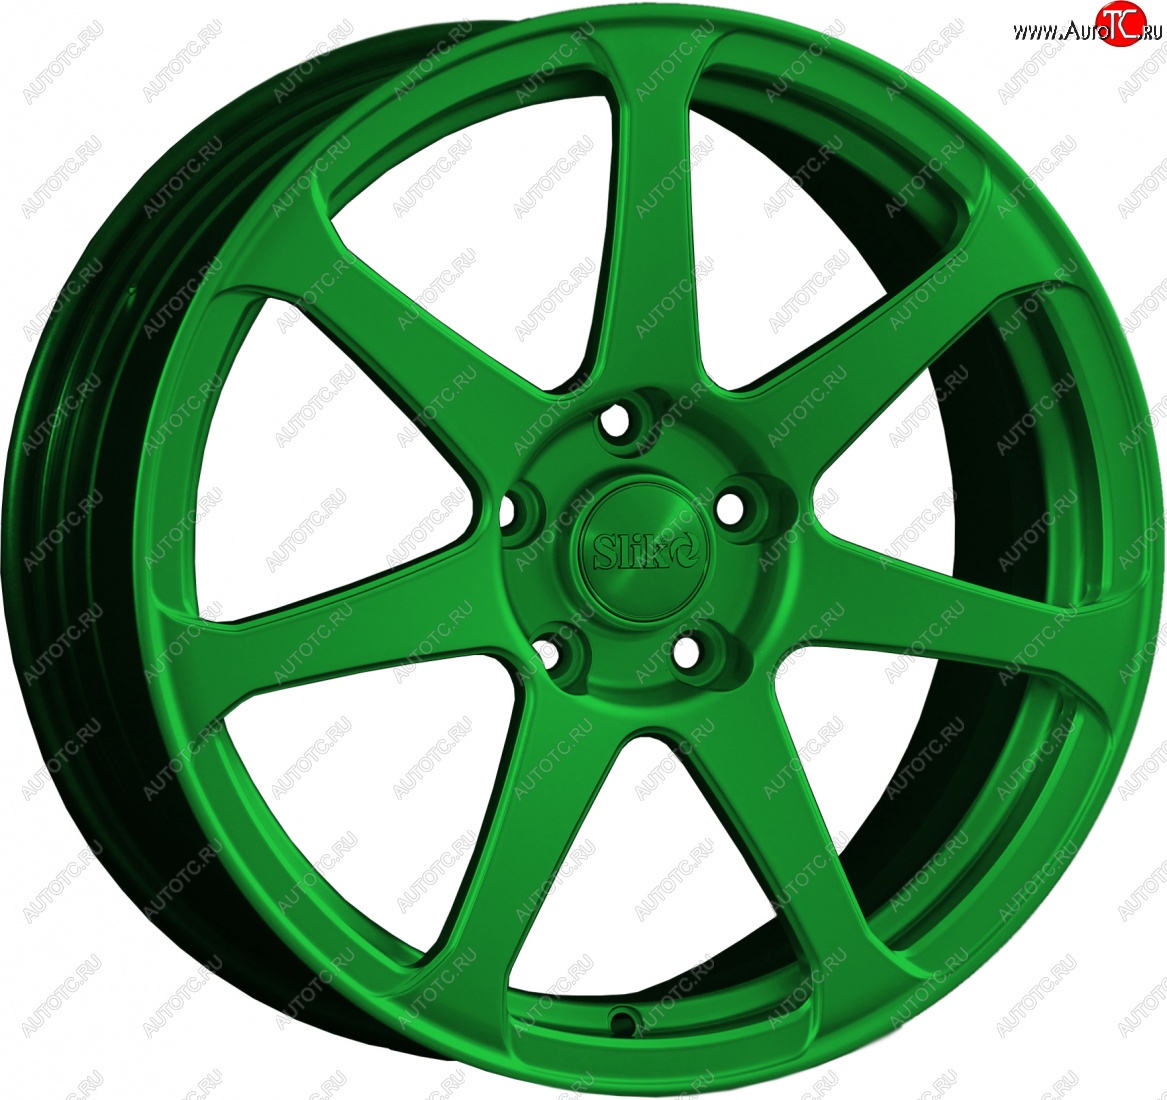 14 499 р. Кованый диск Slik classik R17x7.5 Зеленый (GREEN) 7.5x17 Chevrolet Malibu 8 (2013-2015) 5x110.0xDIA65.1xET40.0 (Цвет: GREEN)